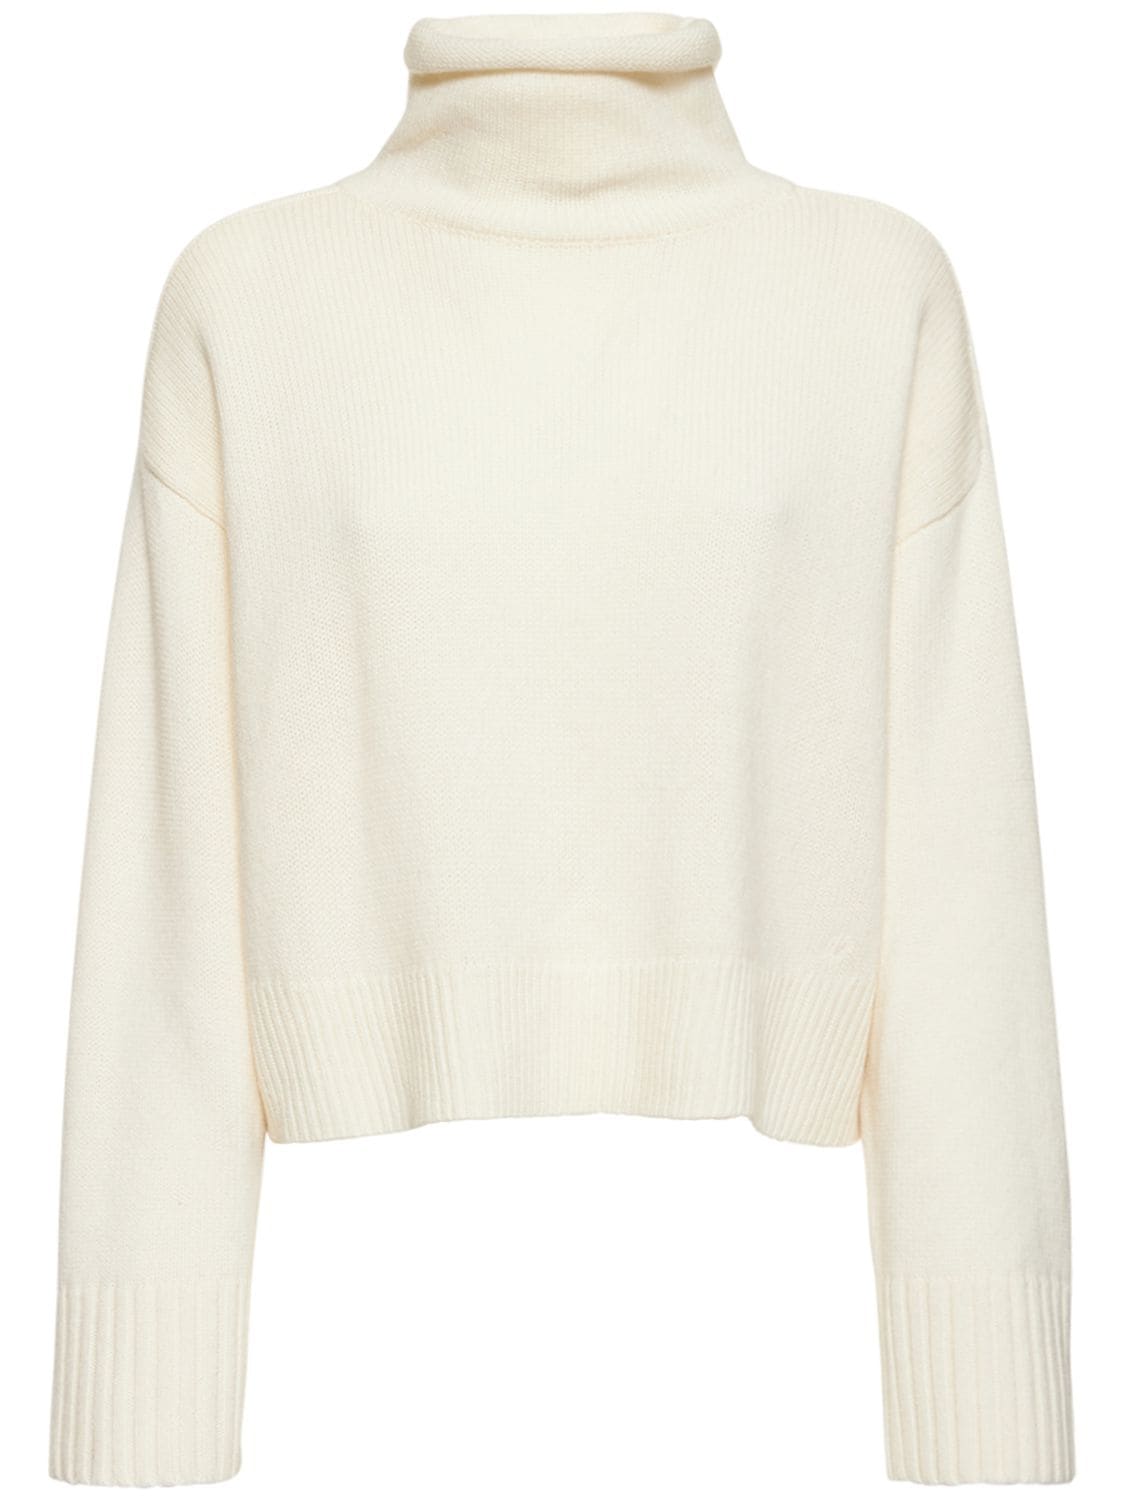 Image of Stintino Wool & Cashmere Sweater